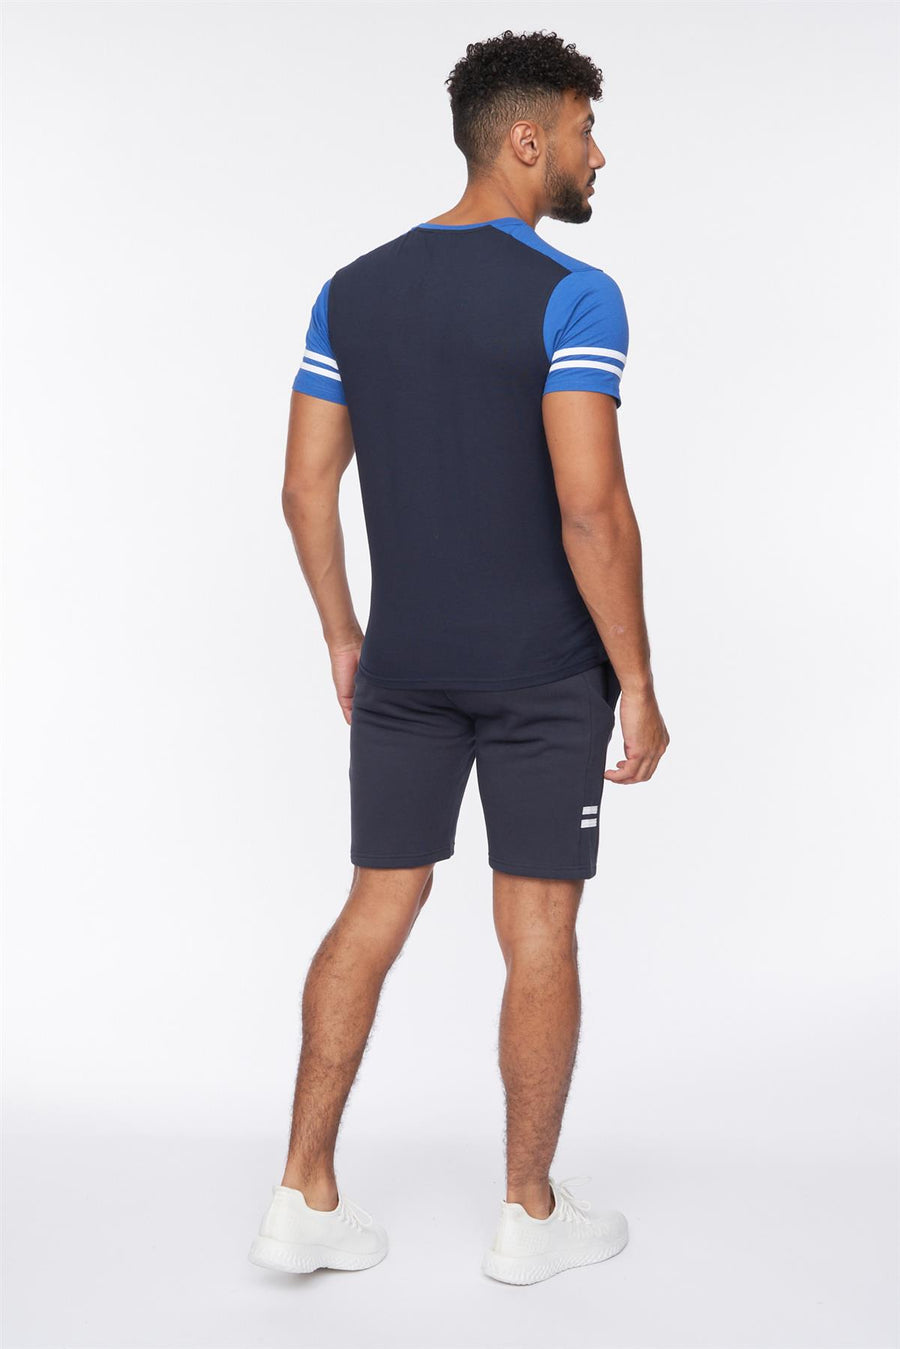 Techland T-Shirt/Shorts Set Navy/Blue